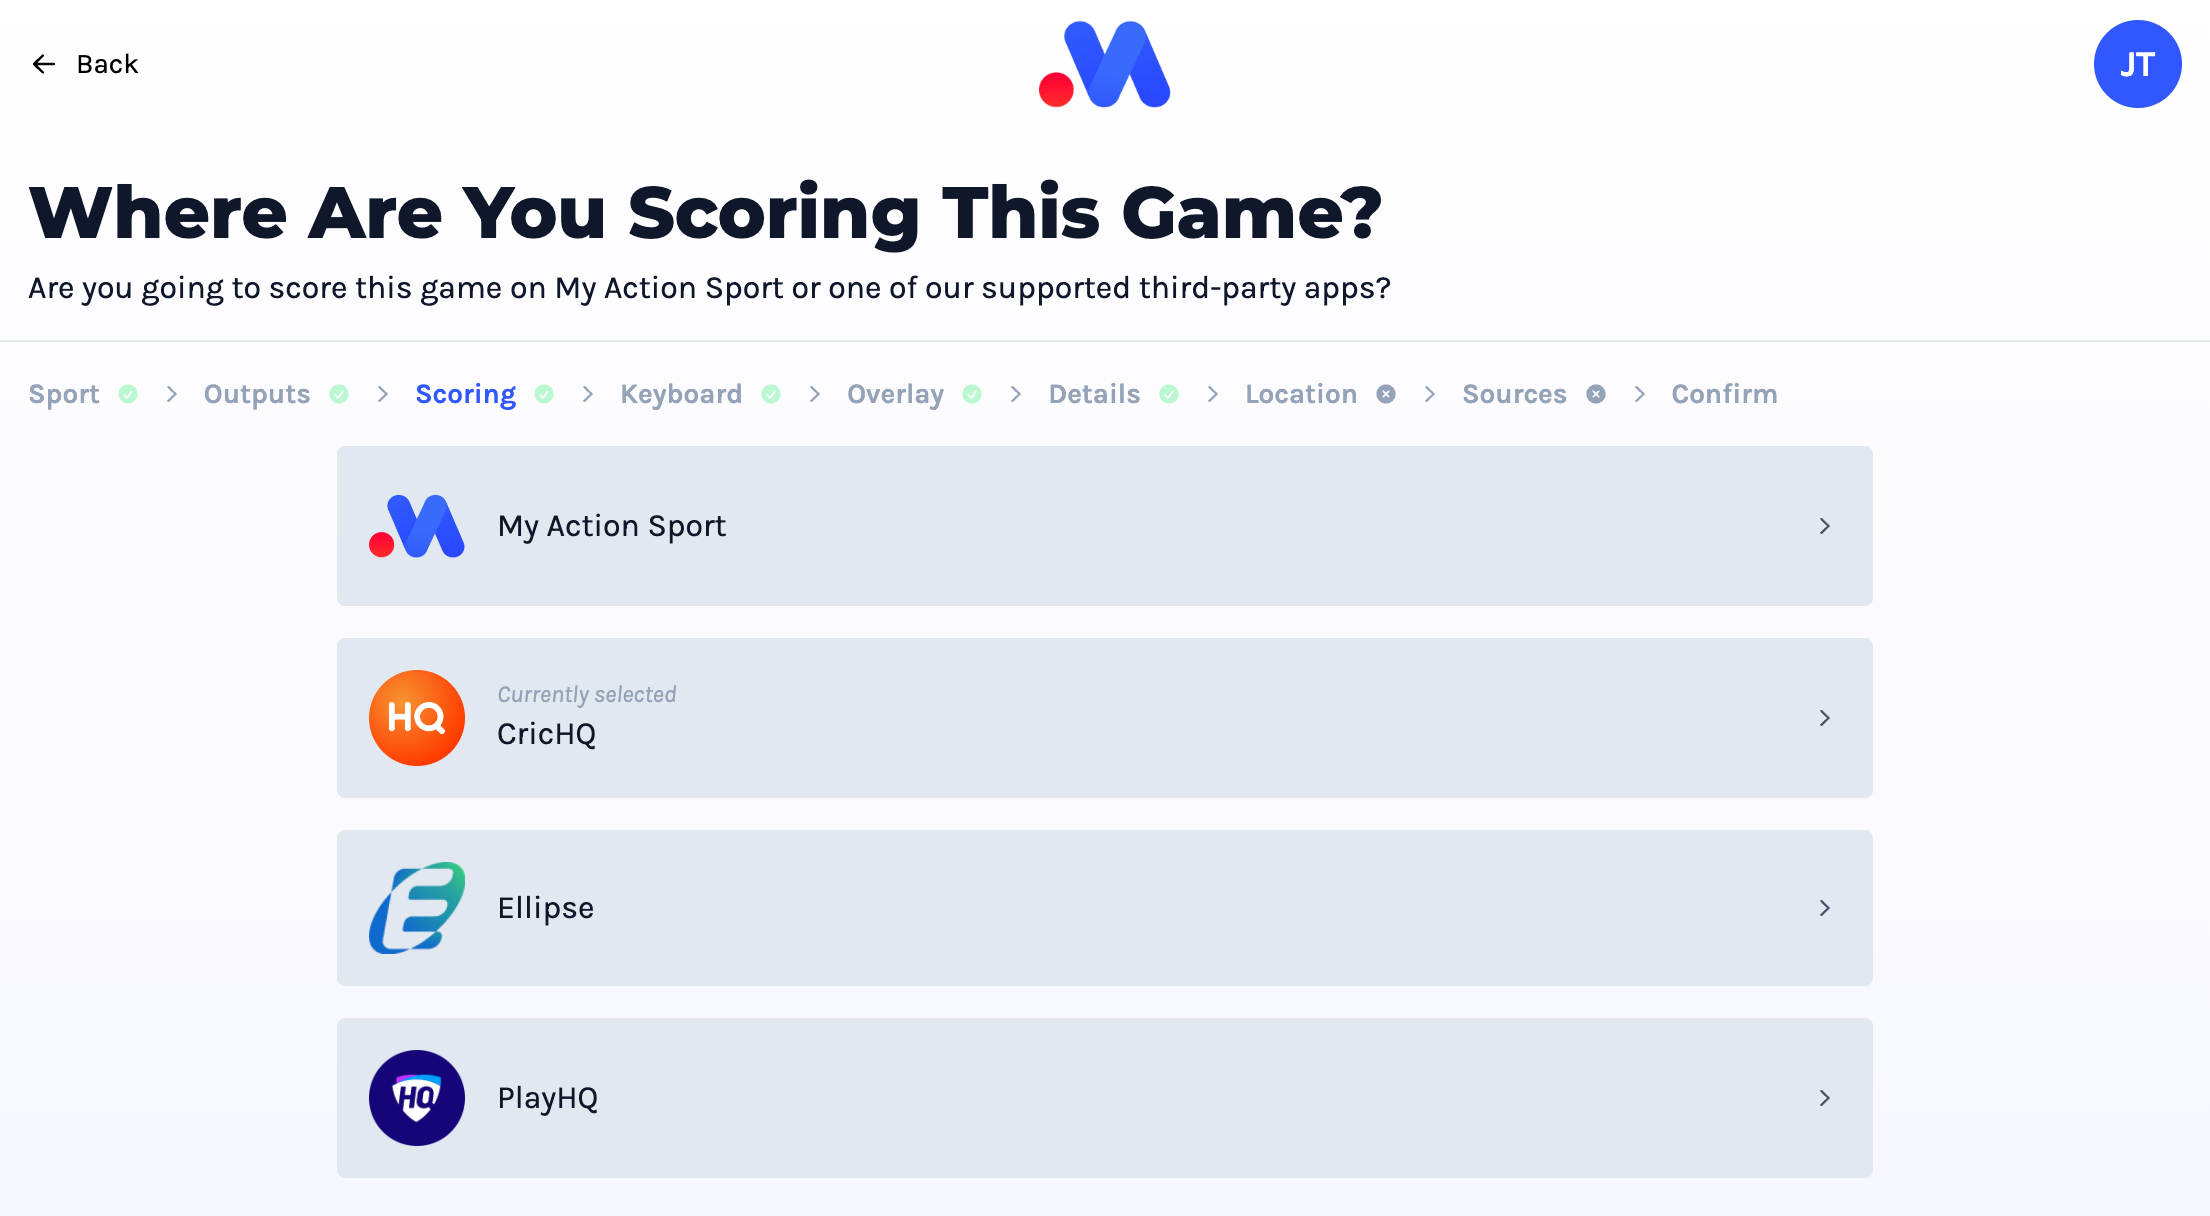 Select "cricHQ" as your scoring app